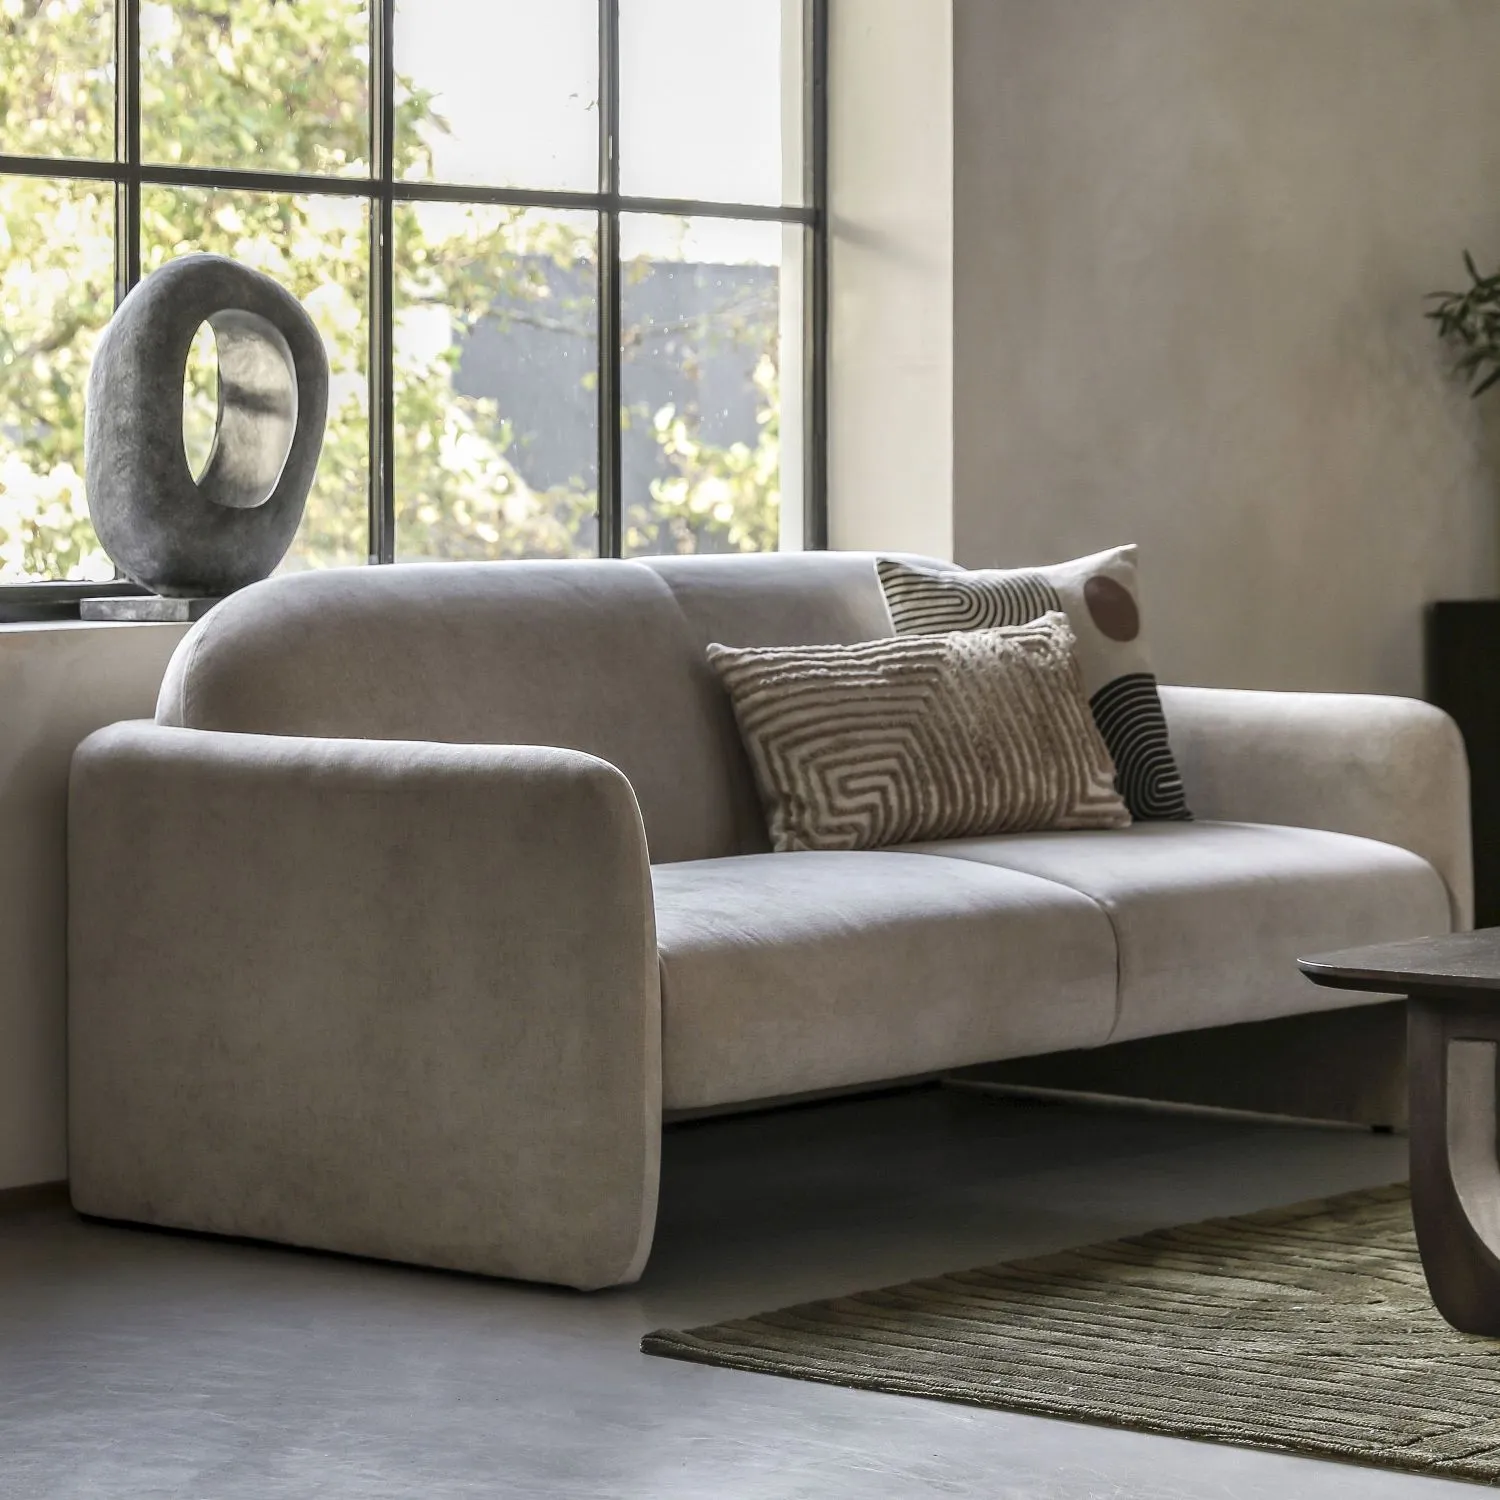 Modern Grey Fabric Upholstered 3 Seater Sofa